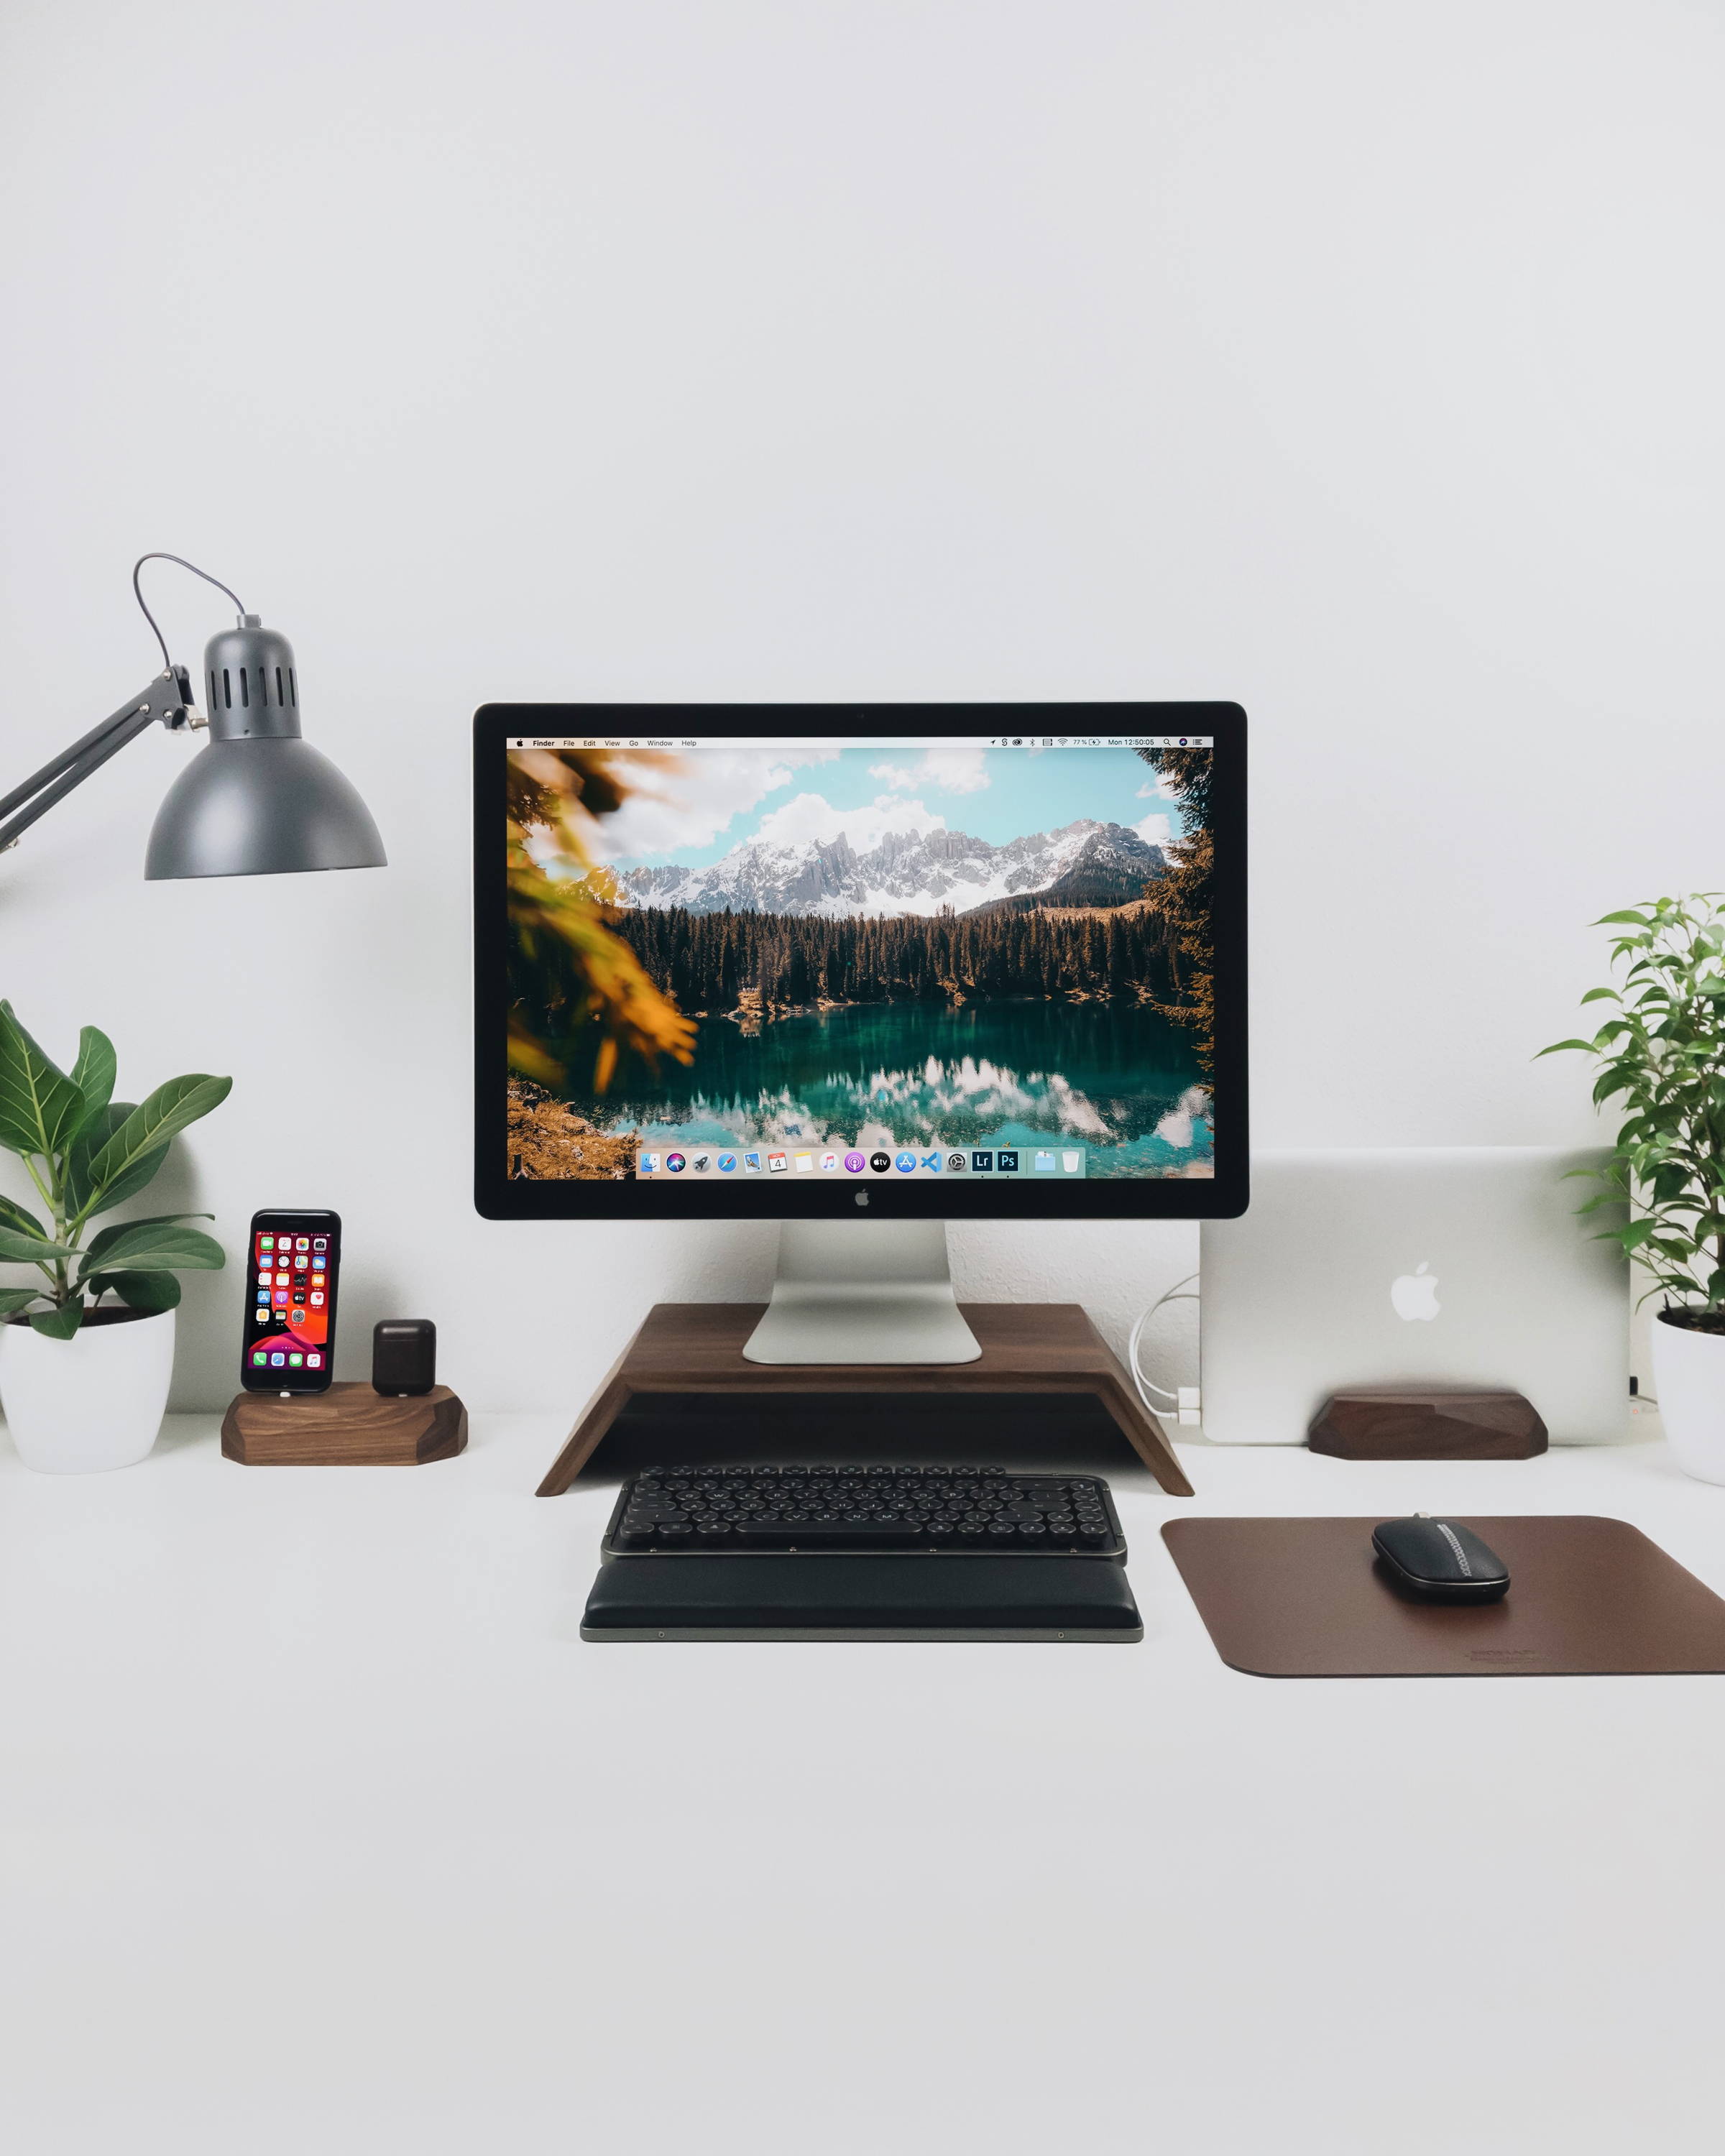 clean minimal desk setup